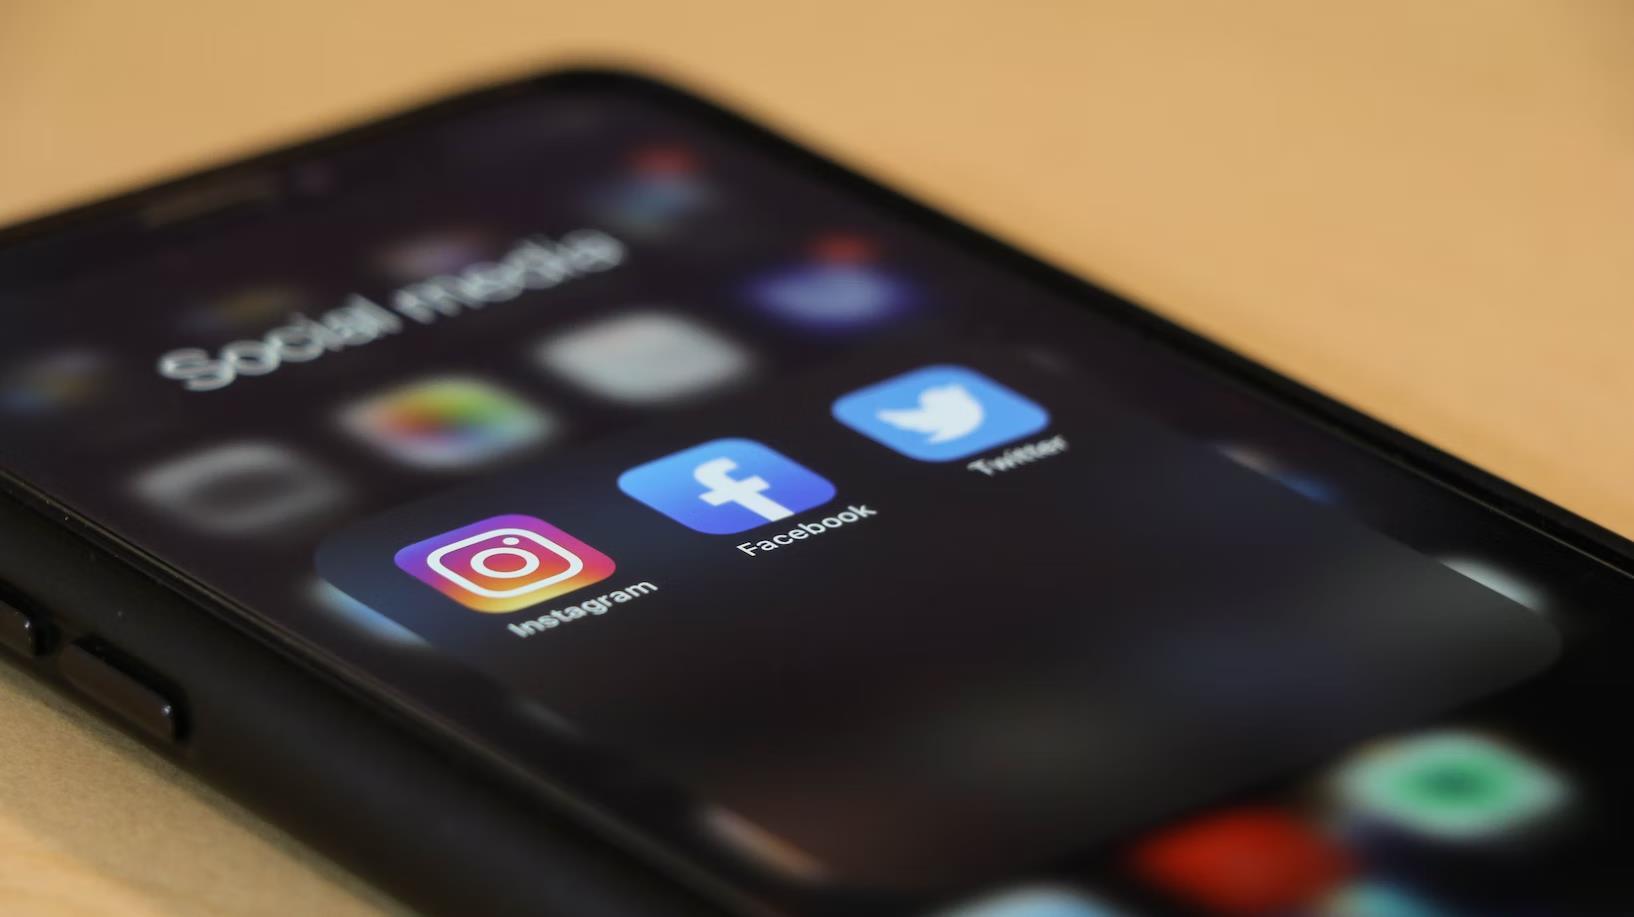 social media apps of instagram,facebook,twitter in iphone